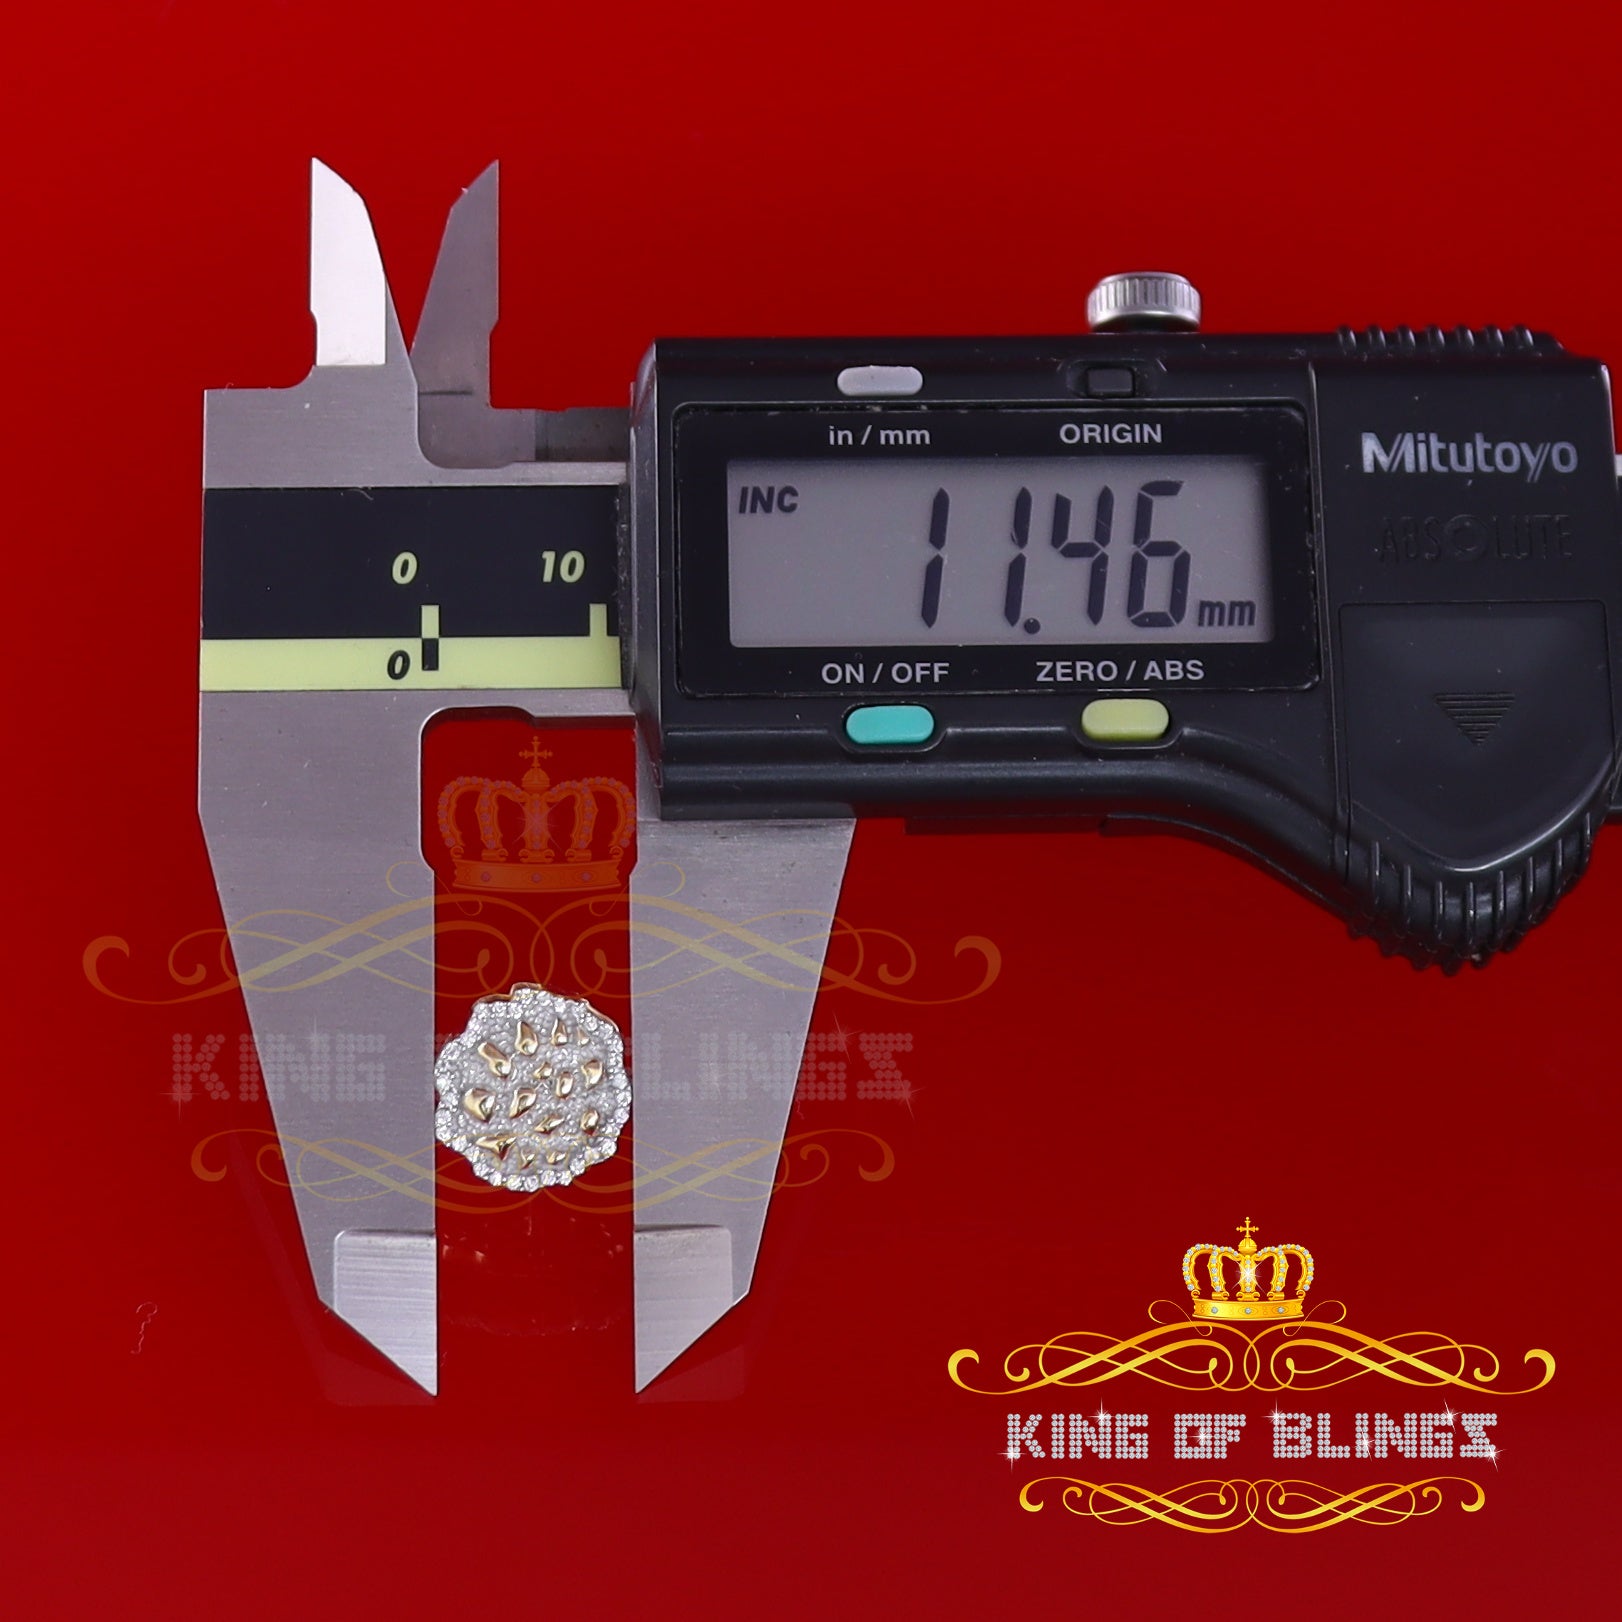 King of Bling's 925 Yellow Silver Nuggtte's 1.38ct Cubic Zirconia Hip Hop Flower Women Earrings KING OF BLINGS